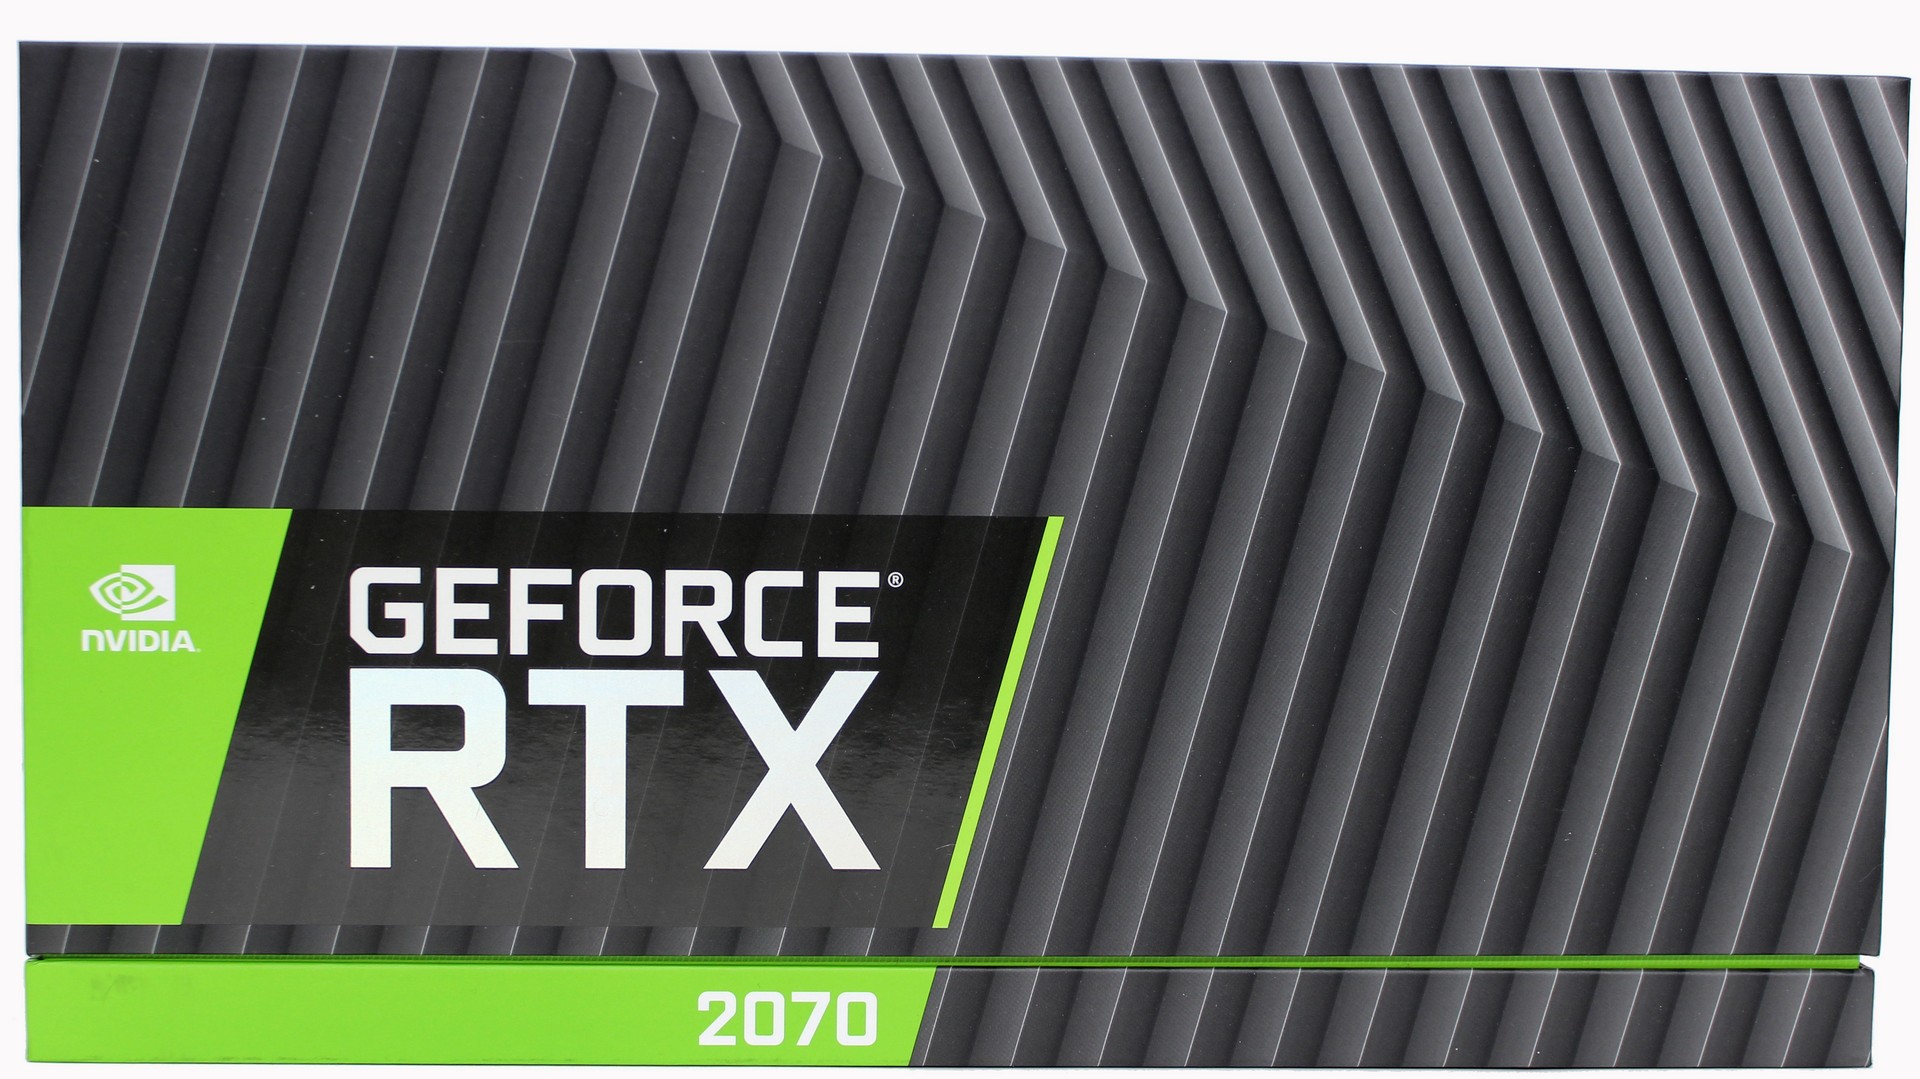 4060 купить днс. GEFORCE RTX 3090 коробка. GEFORCE RTX 2060 коробка. RTX 2060 super коробка. NVIDIA RTX 3060 коробка.